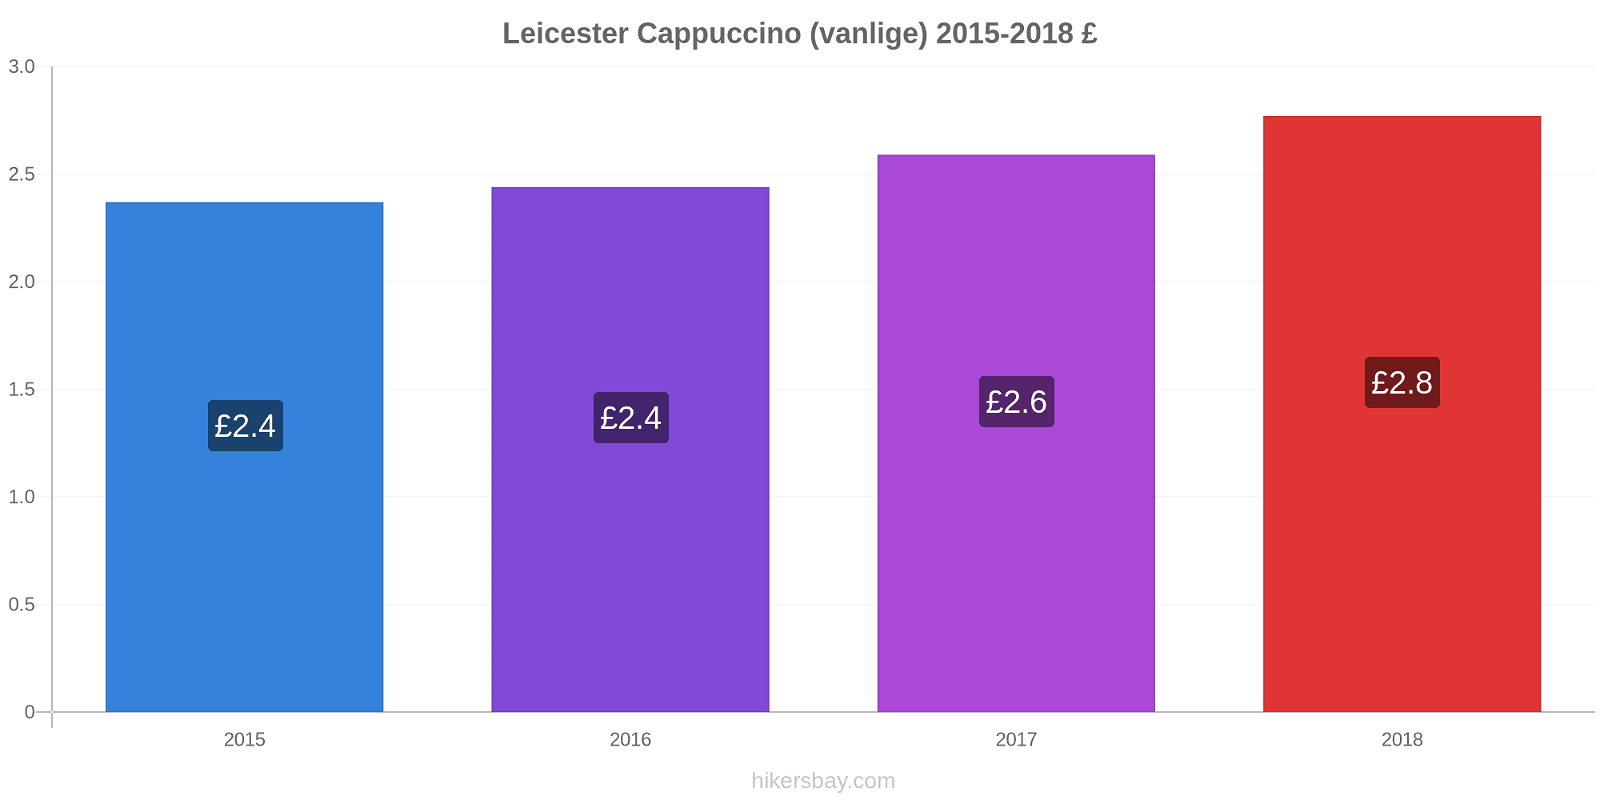 Leicester prisendringer Cappuccino (vanlige) hikersbay.com